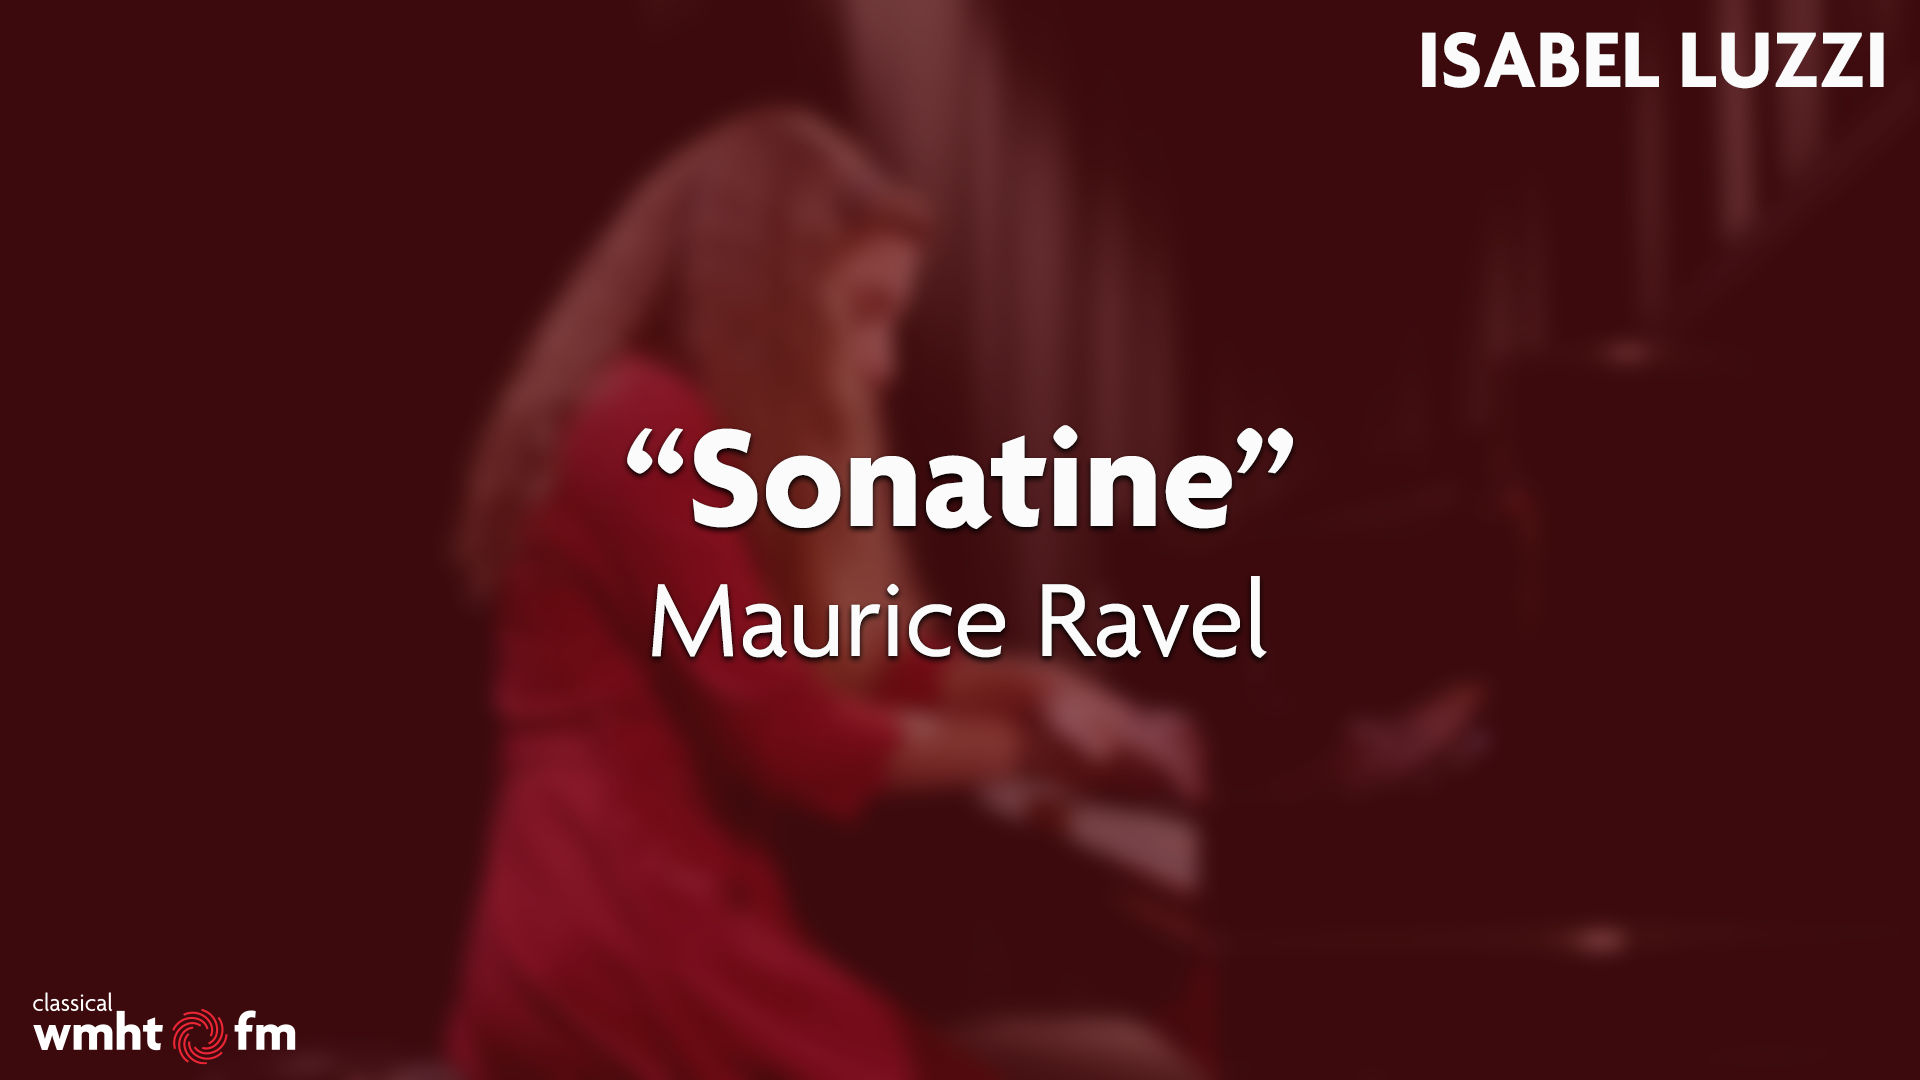 Isabel Luzzi | “Sonatine” by Maurice Ravel